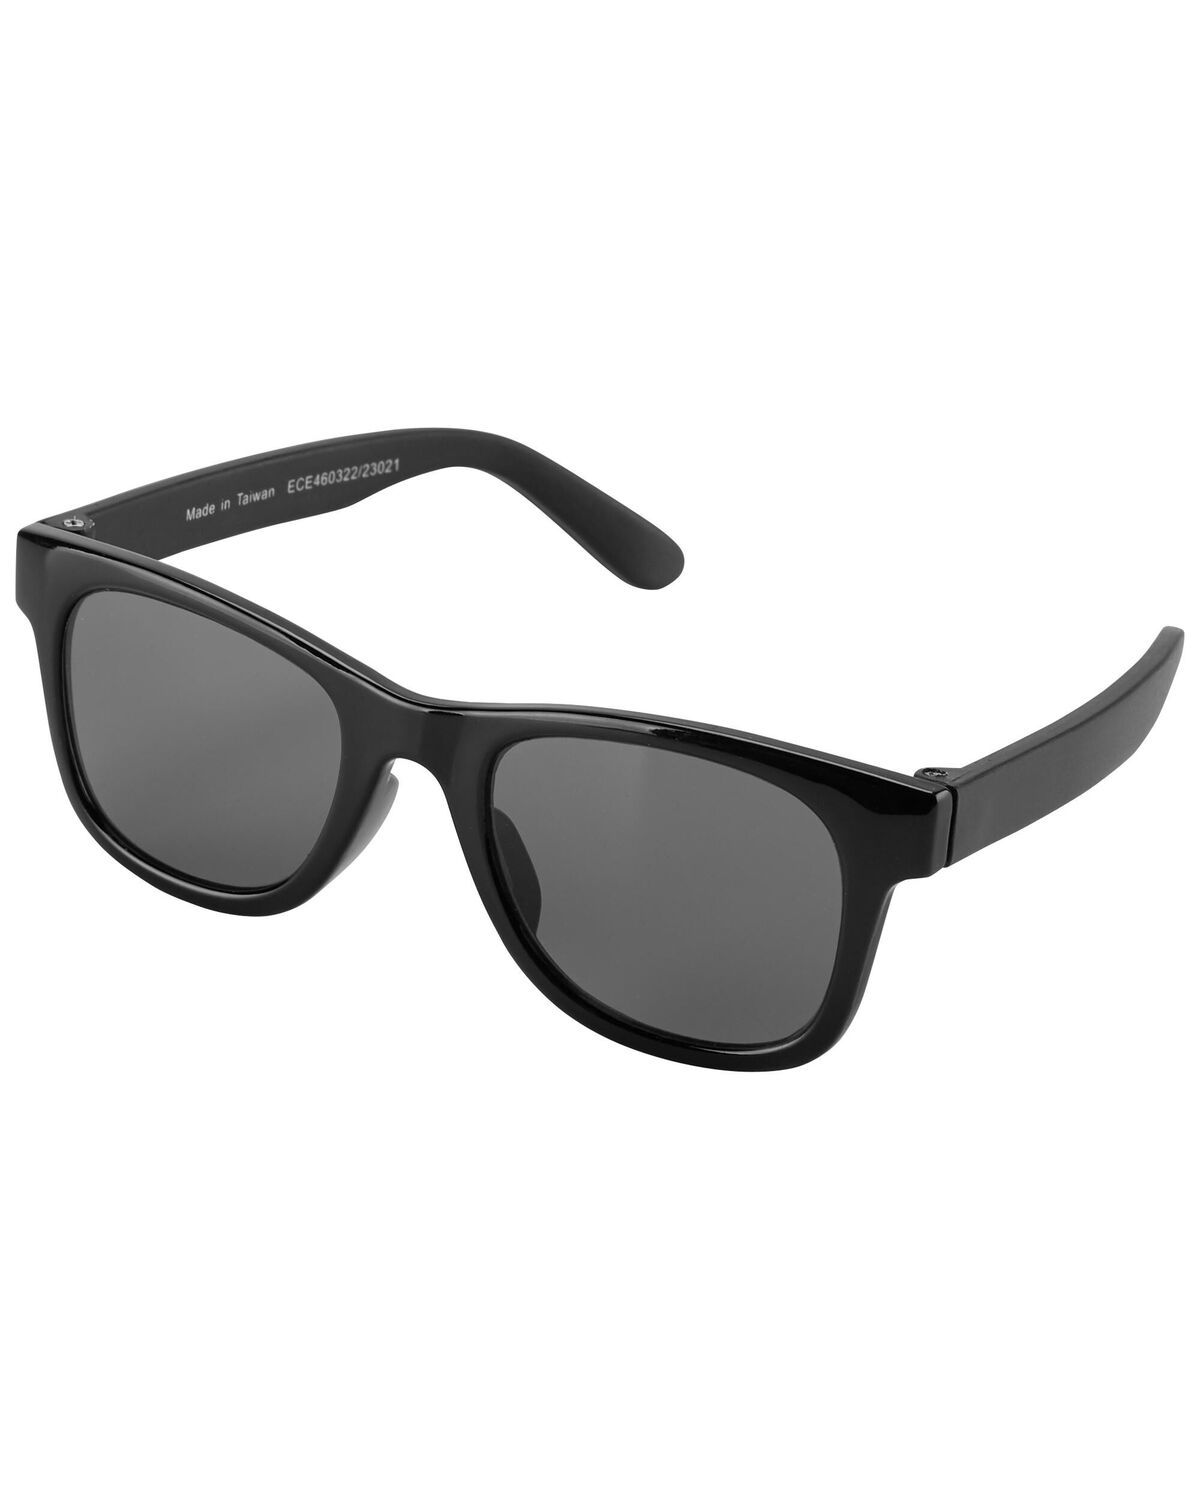 Black Kid Classic Sunglasses | carters.com | Carter's